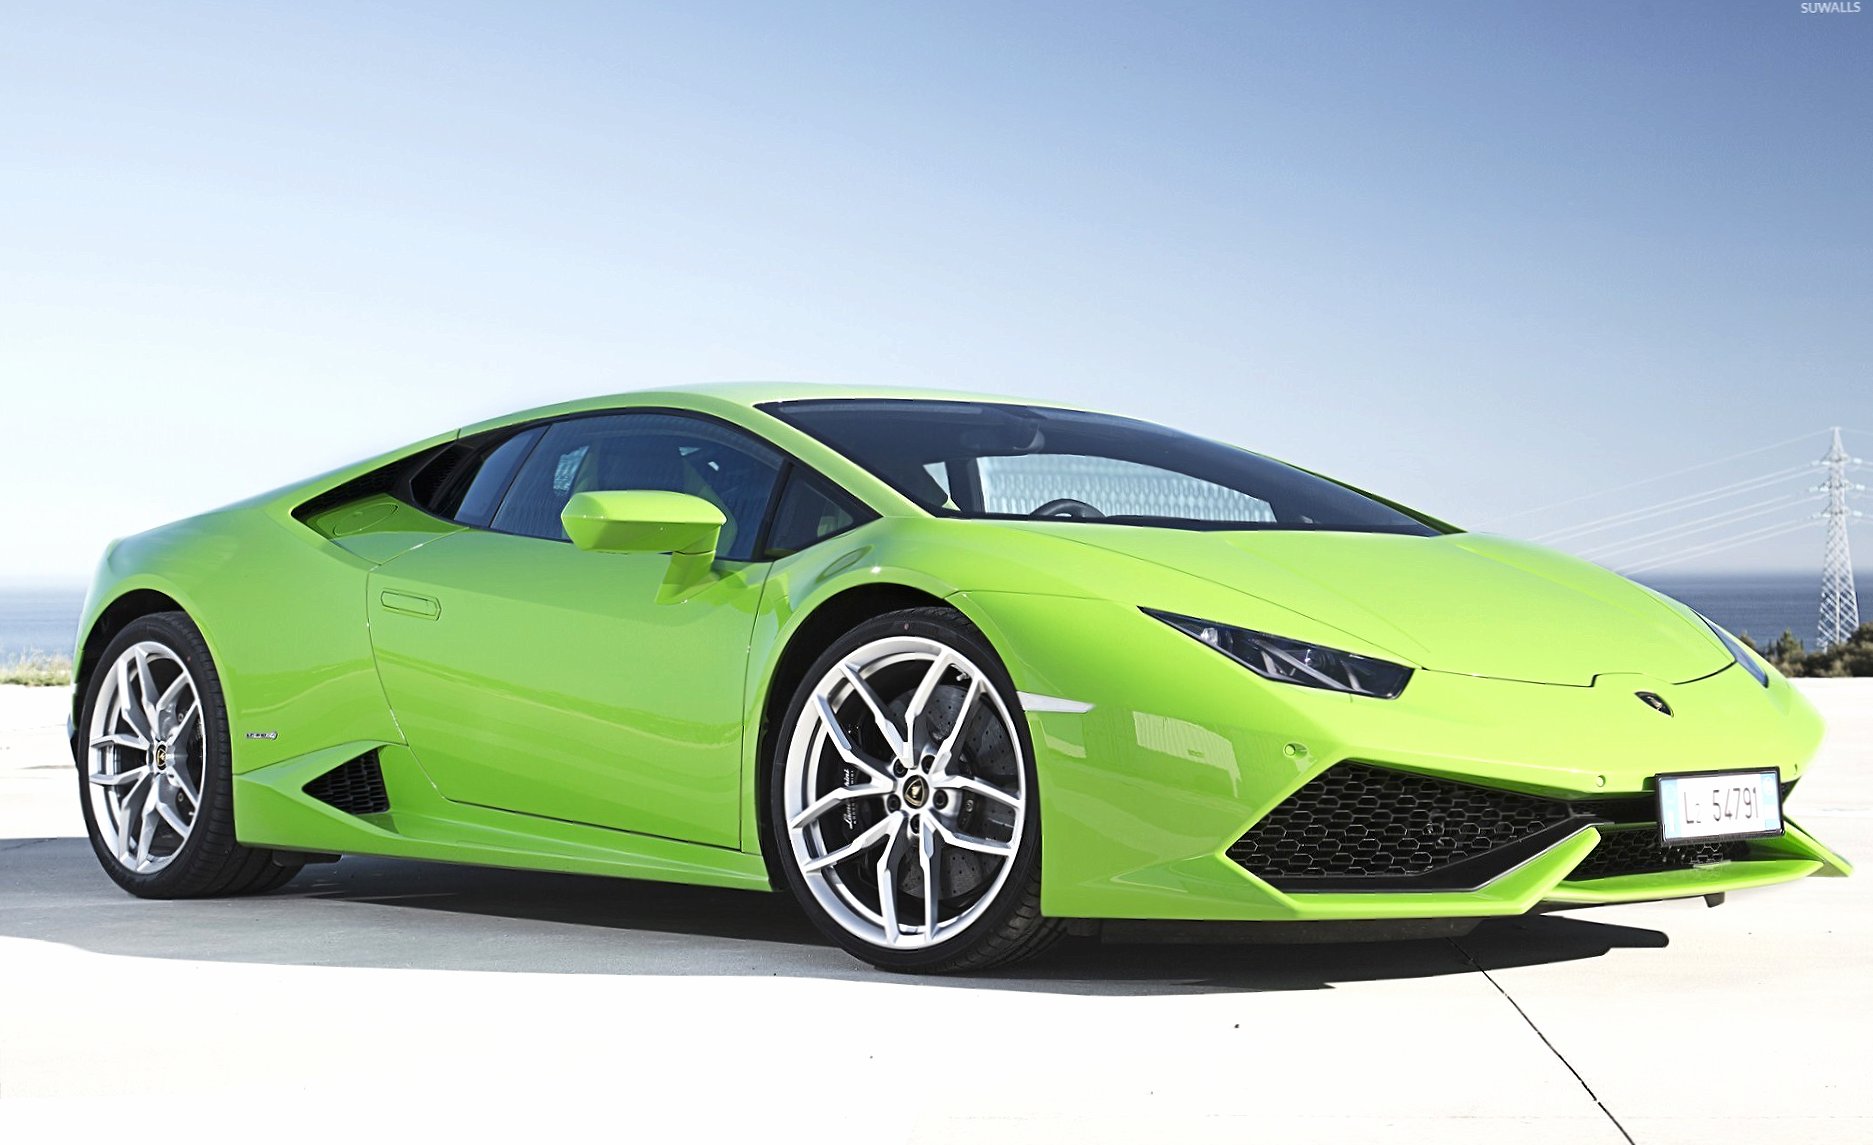 2014 Green Lamborghini Huracan at 2048 x 2048 iPad size wallpapers HD quality